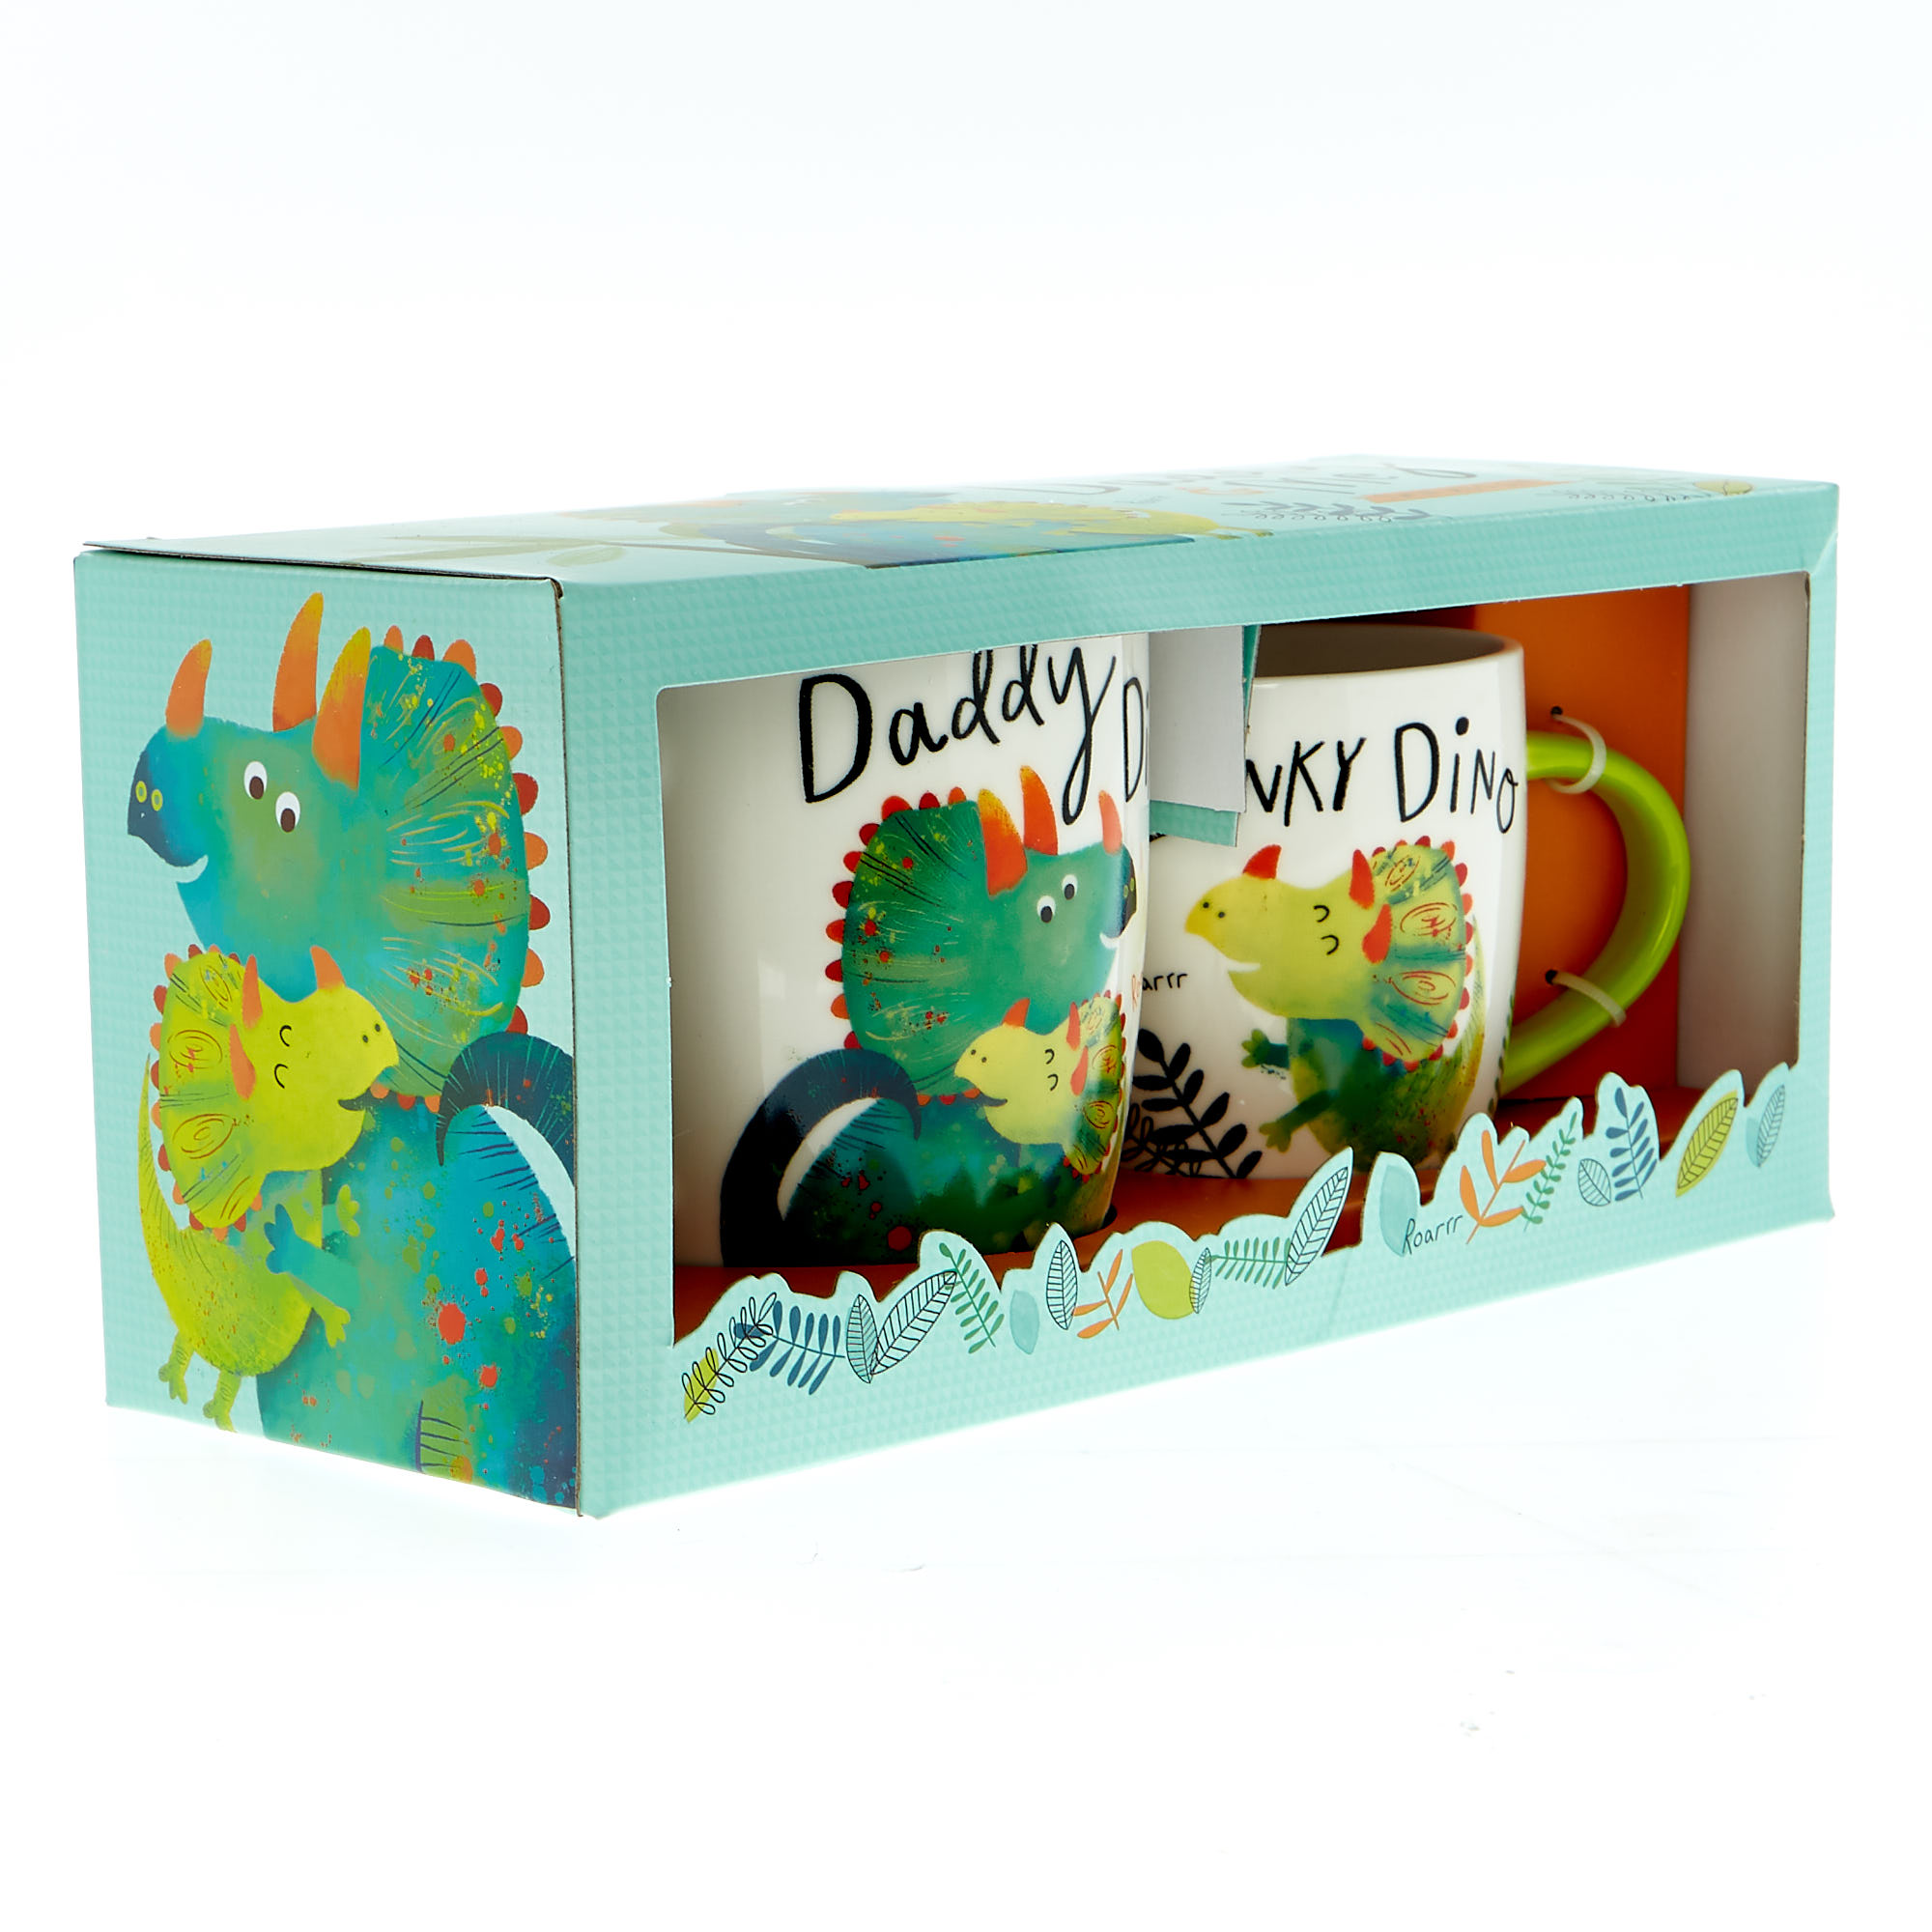 Green Dino Daddy & Me Twin Mug Set